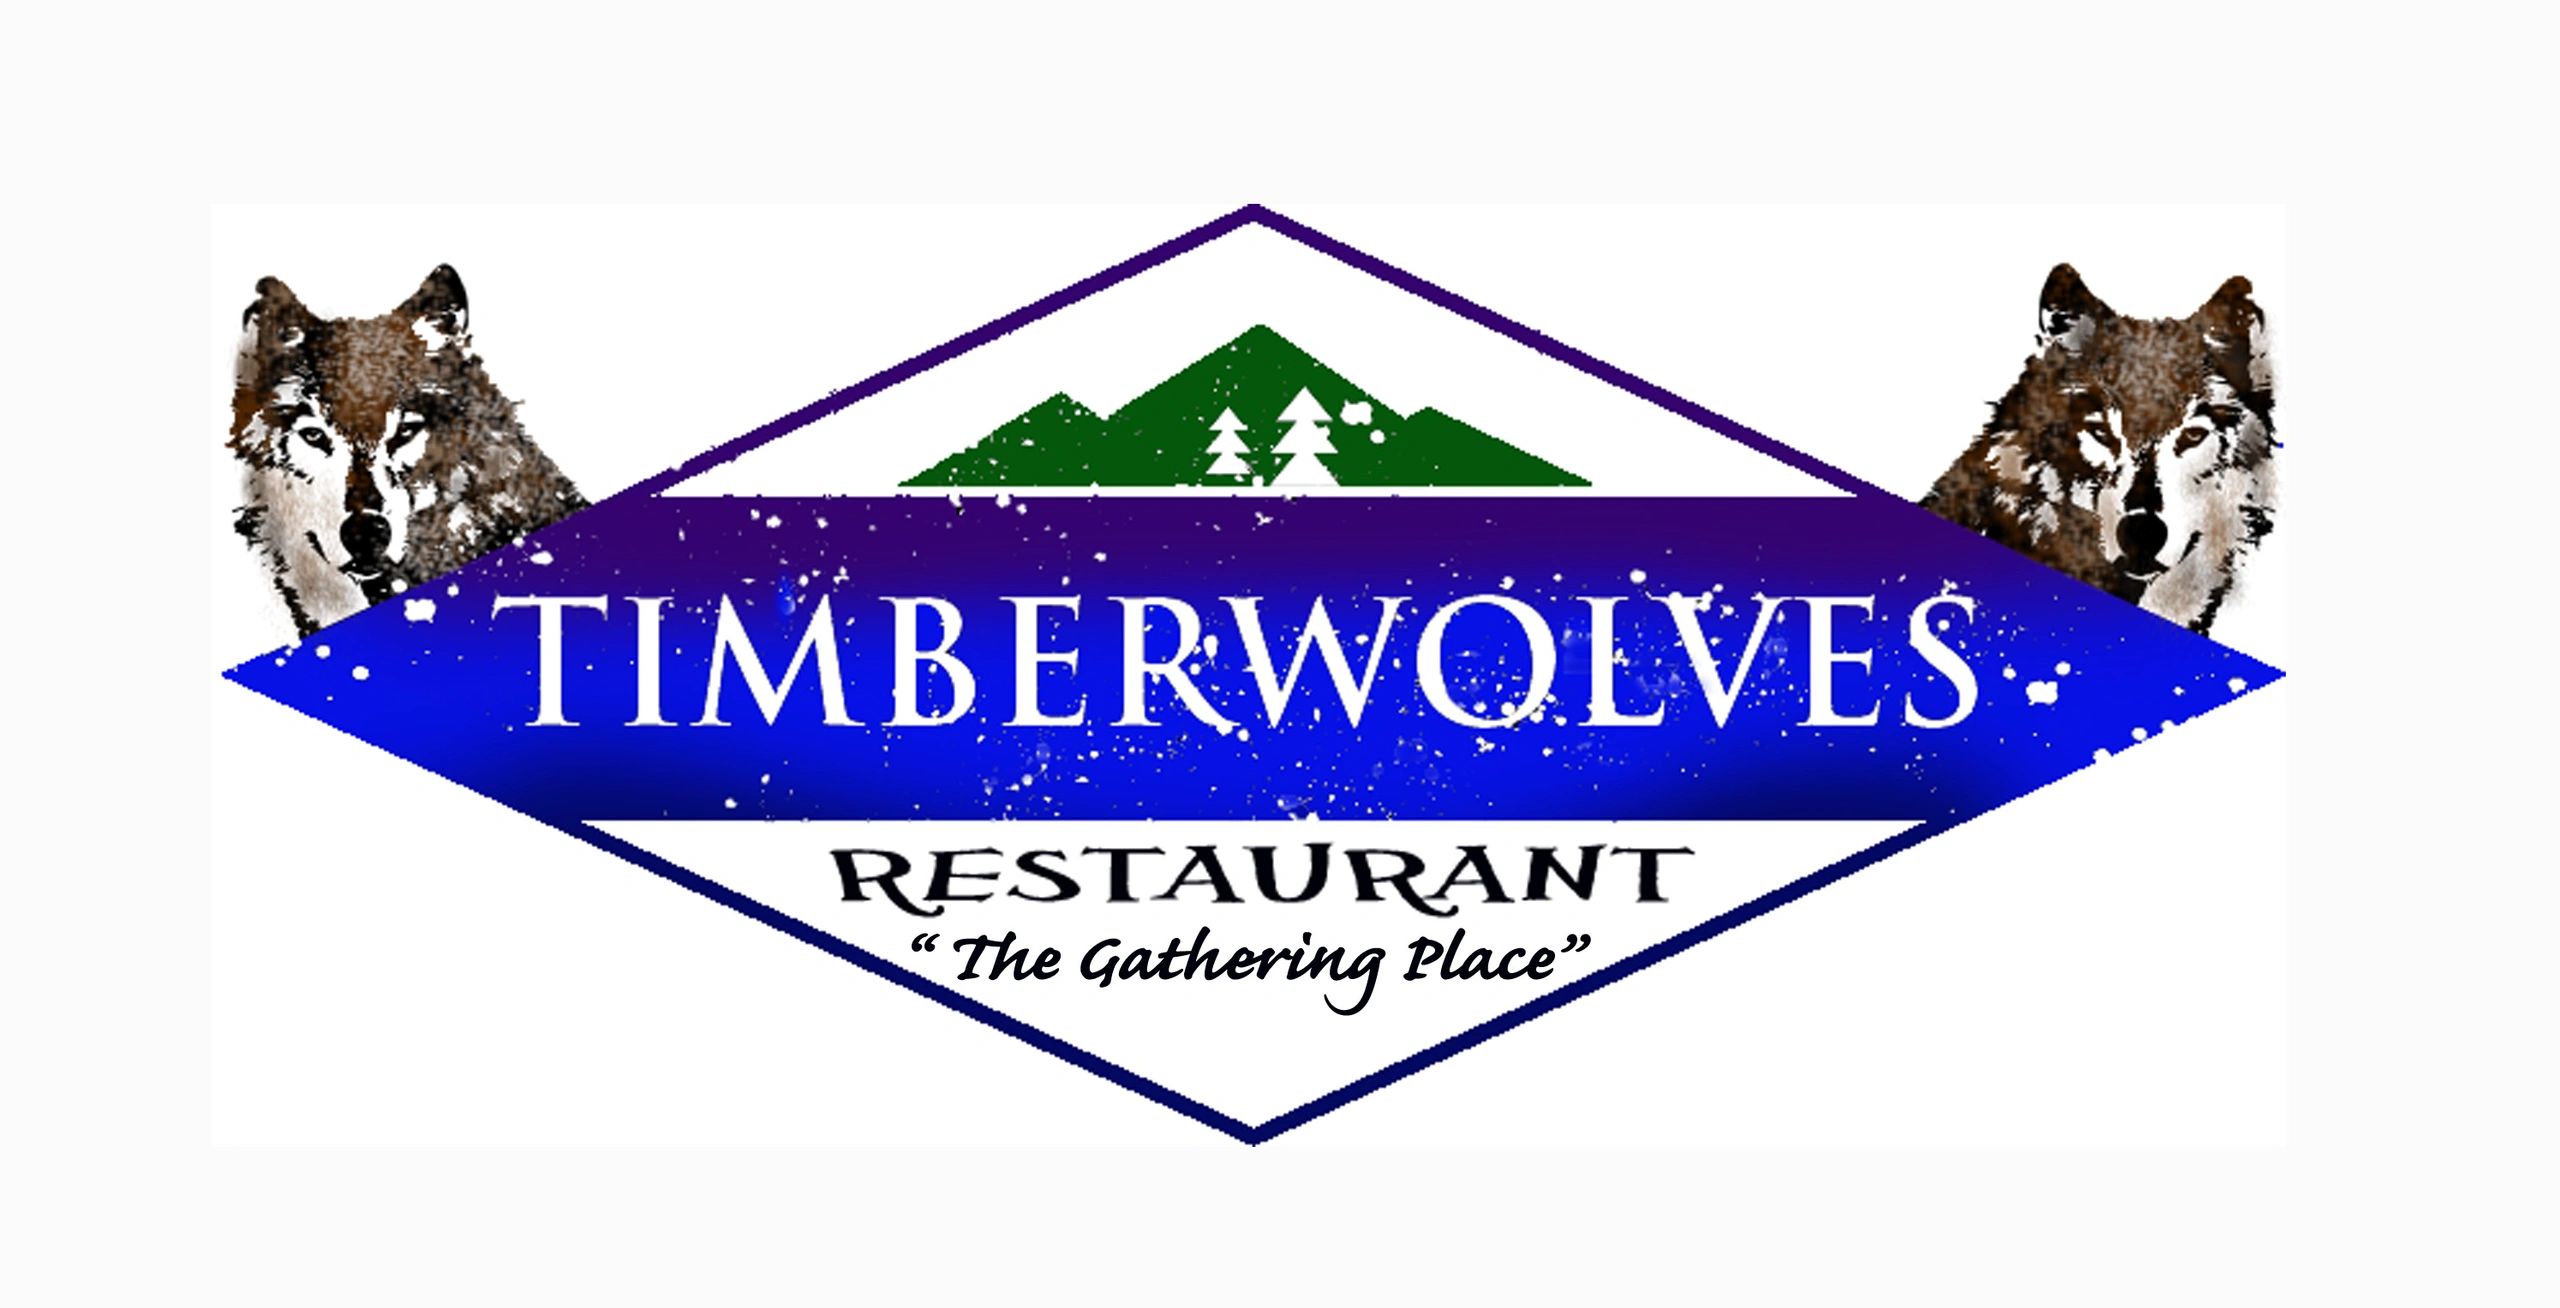 (c) Timberwolvesrestaurant.com